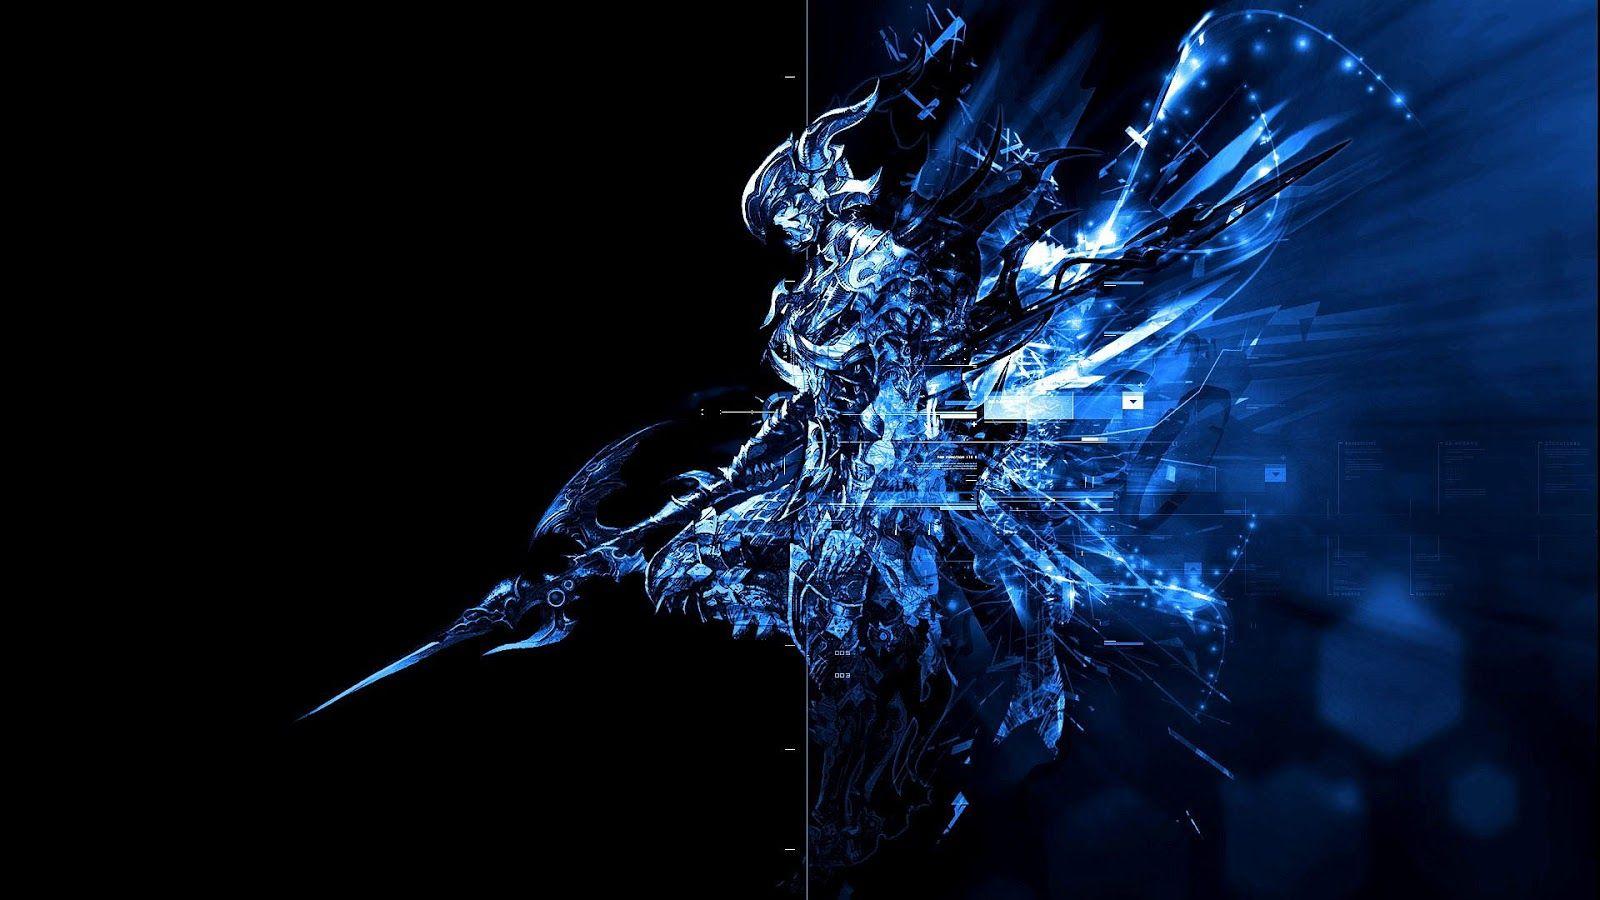 Final Fantasy XIV Heavensward Wallpaper. Read games reviews, play